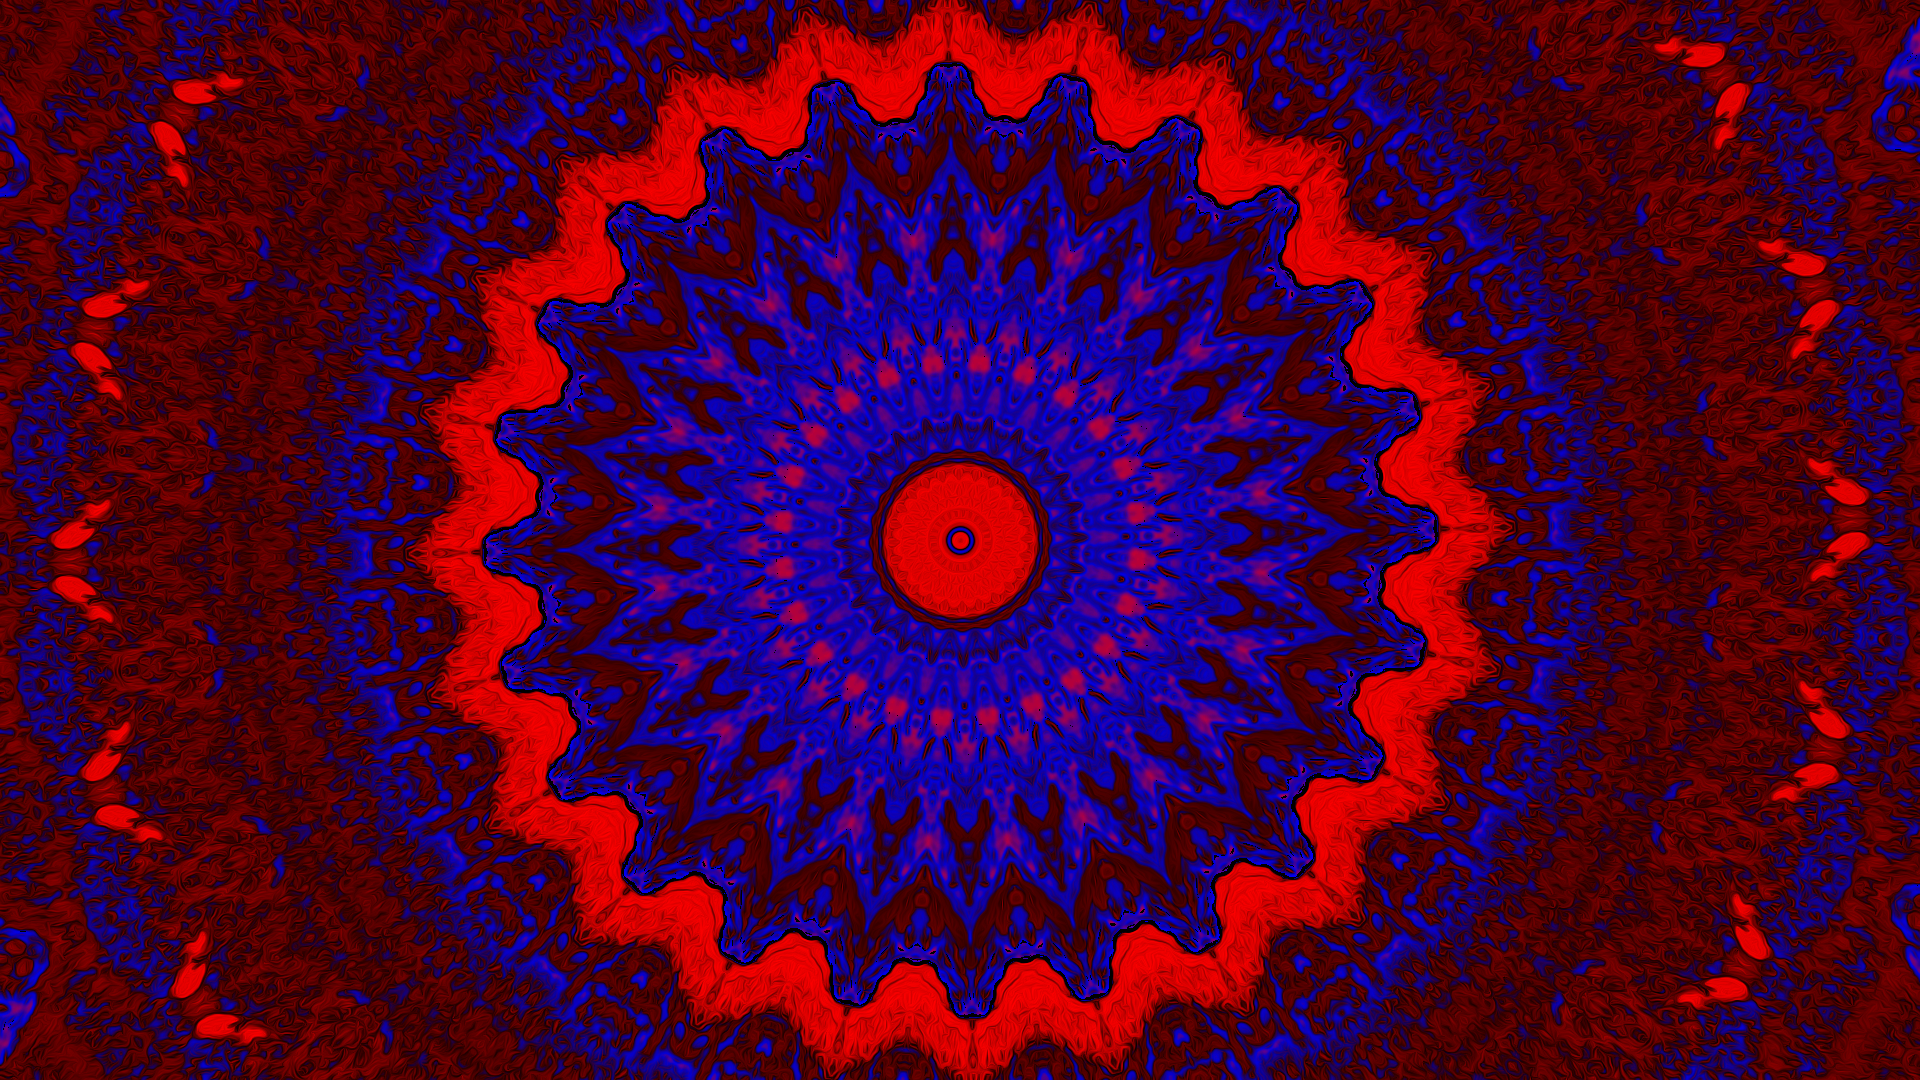 Abstract Kaleidoscope HD Wallpaper | Background Image